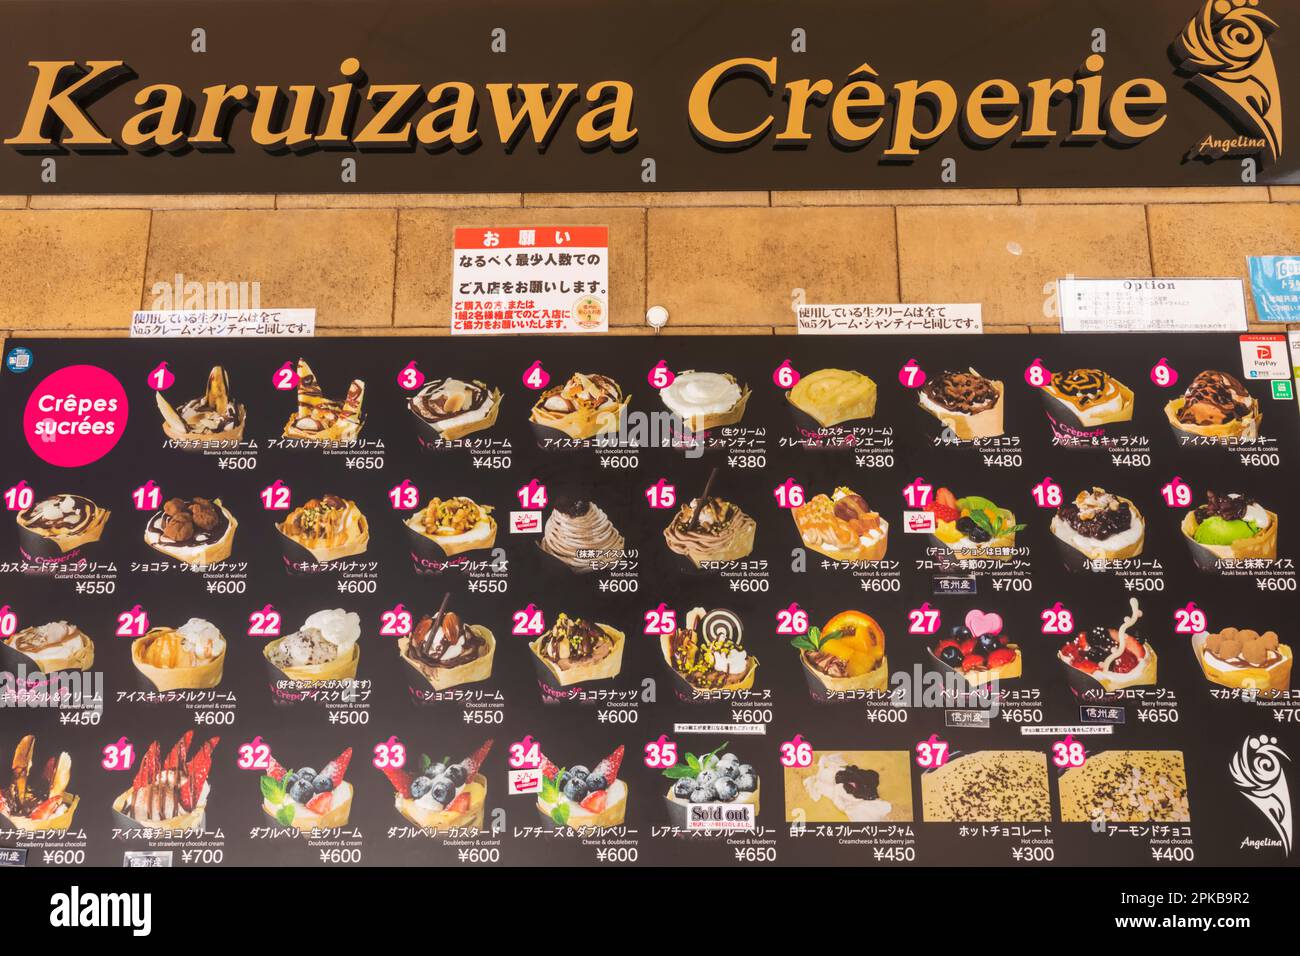 Japan, Honshu, Nagano Prefecture, Karuizawa, Karuizawa Creperie, Colourful Crepe Menu Stock Photo